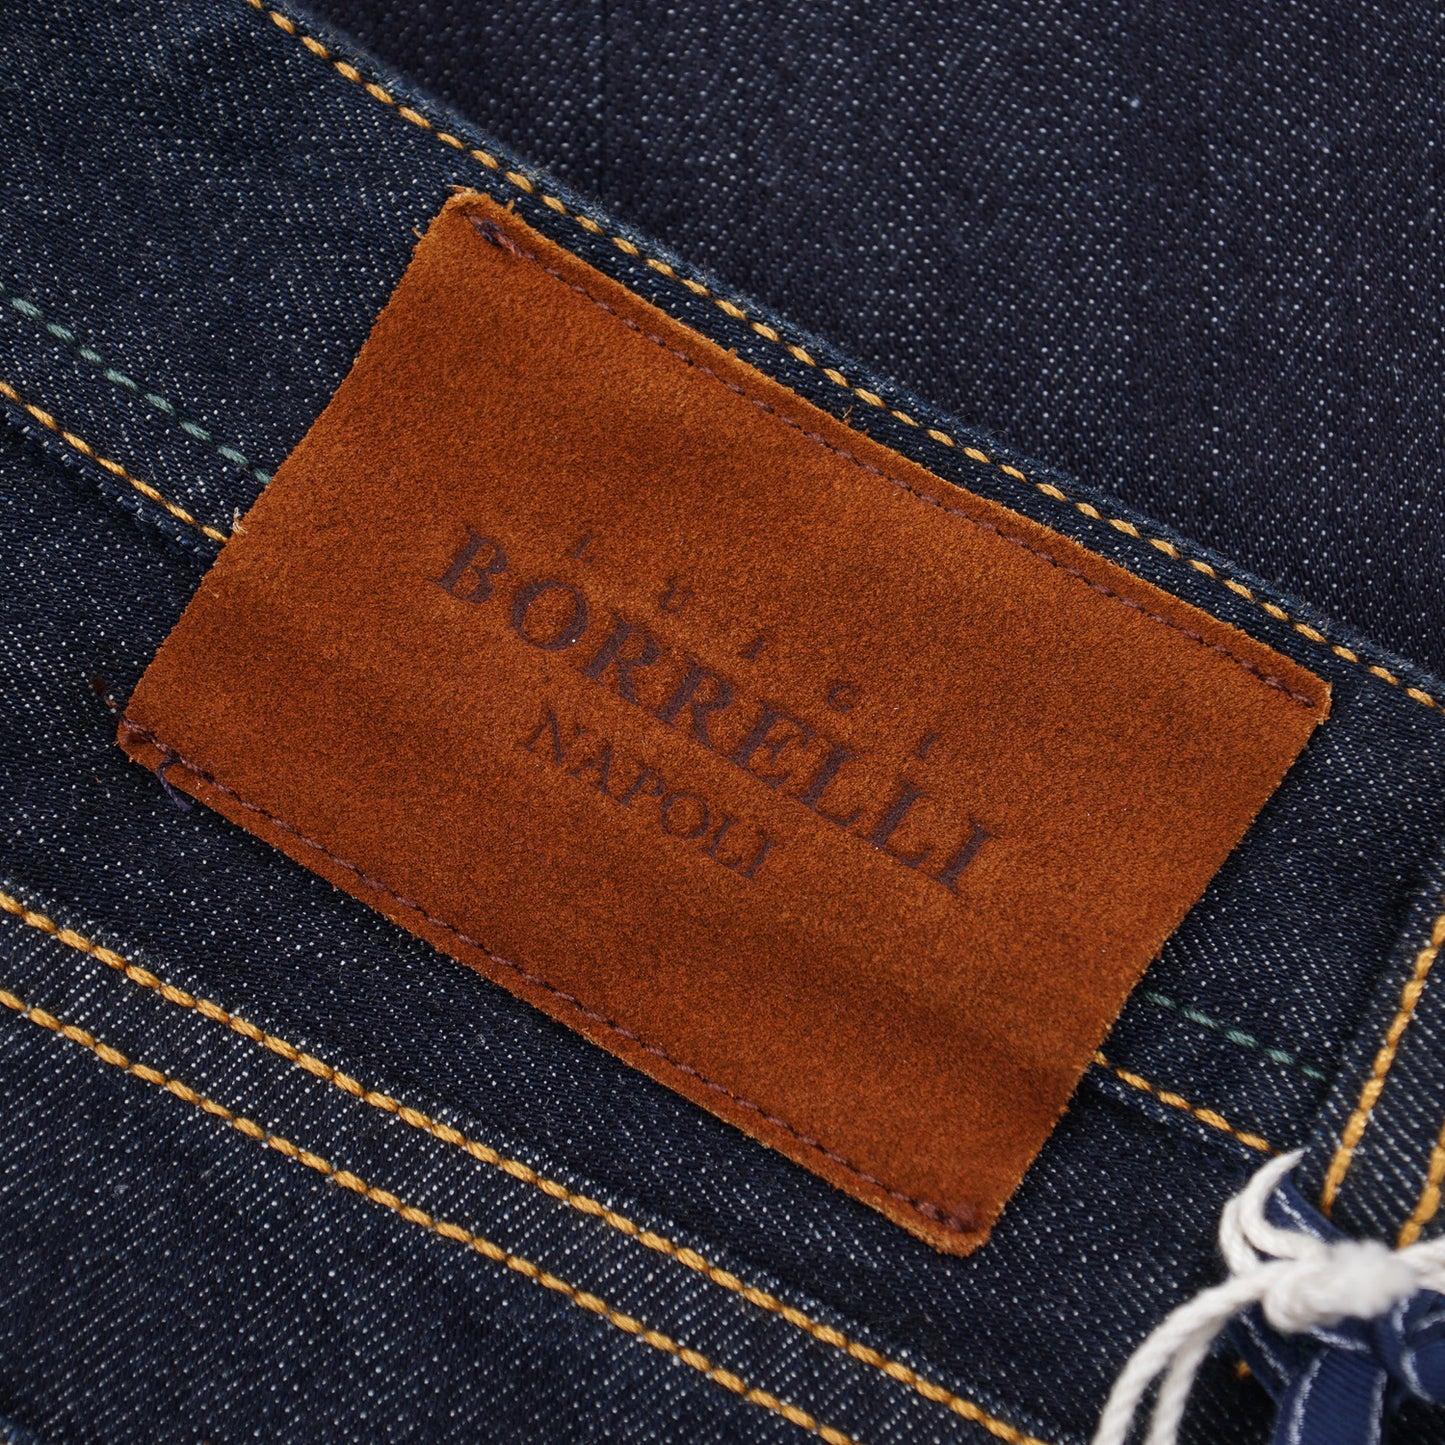 Luigi Borrelli Trim-Fit Denim Jeans - Top Shelf Apparel